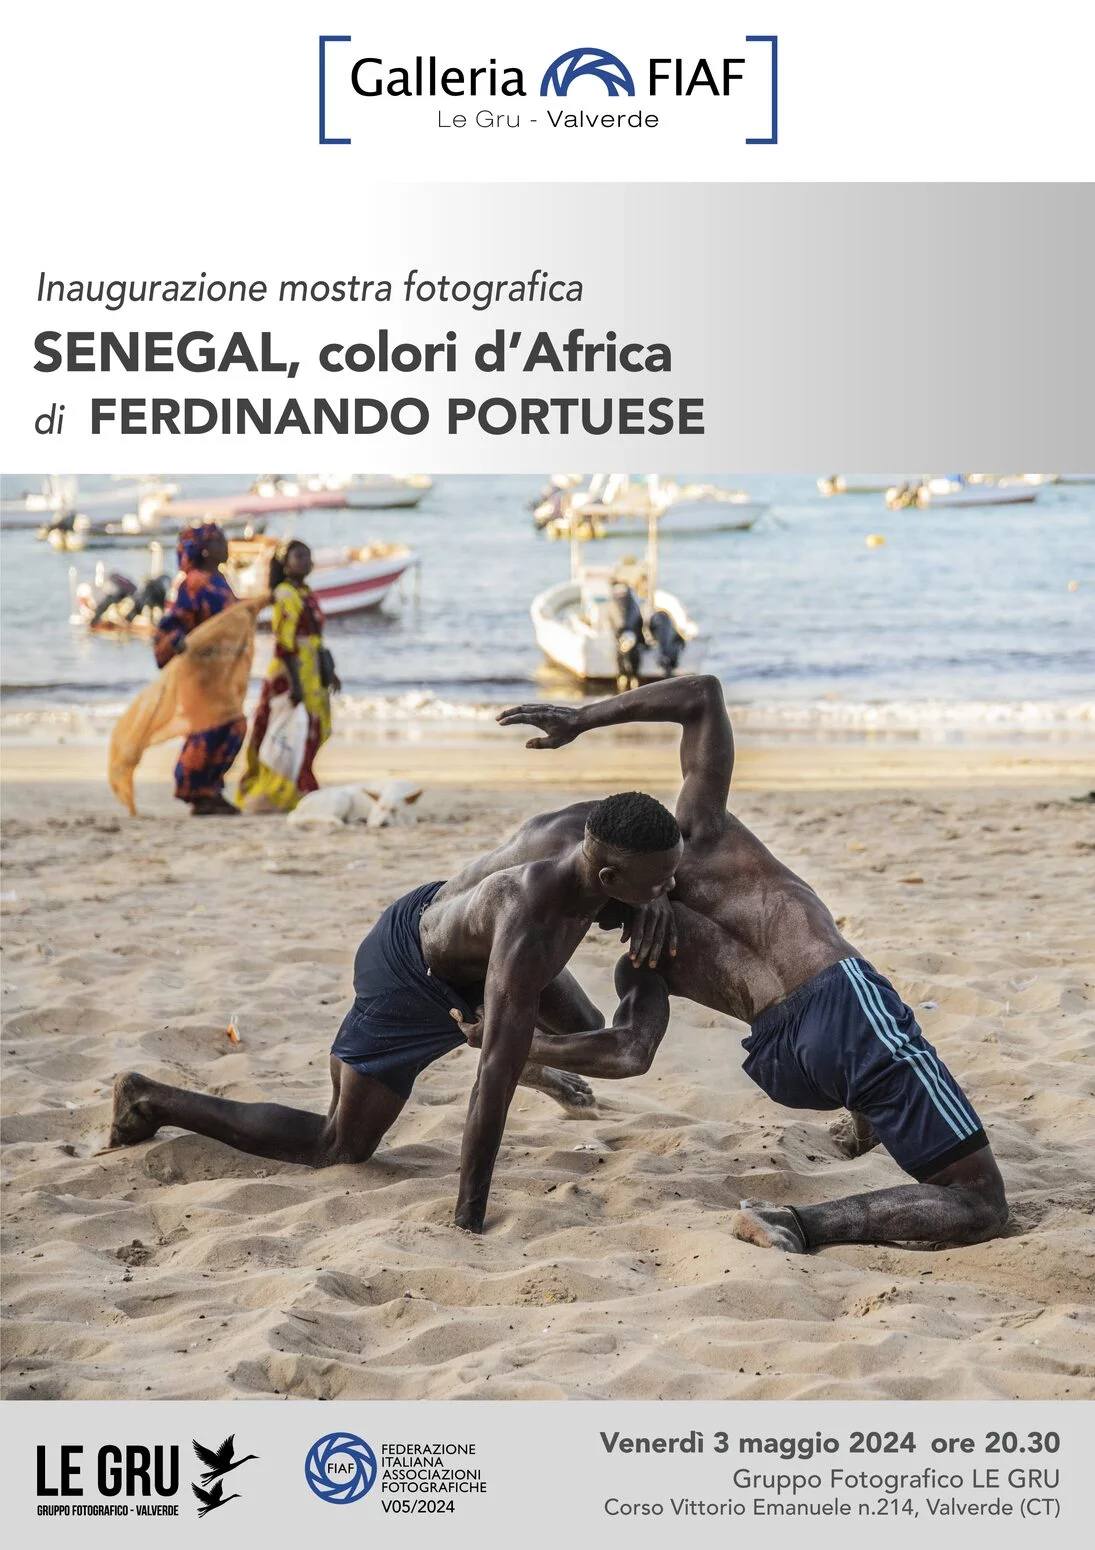 Ferdinando Portuese. Senegal, colori d'Africa